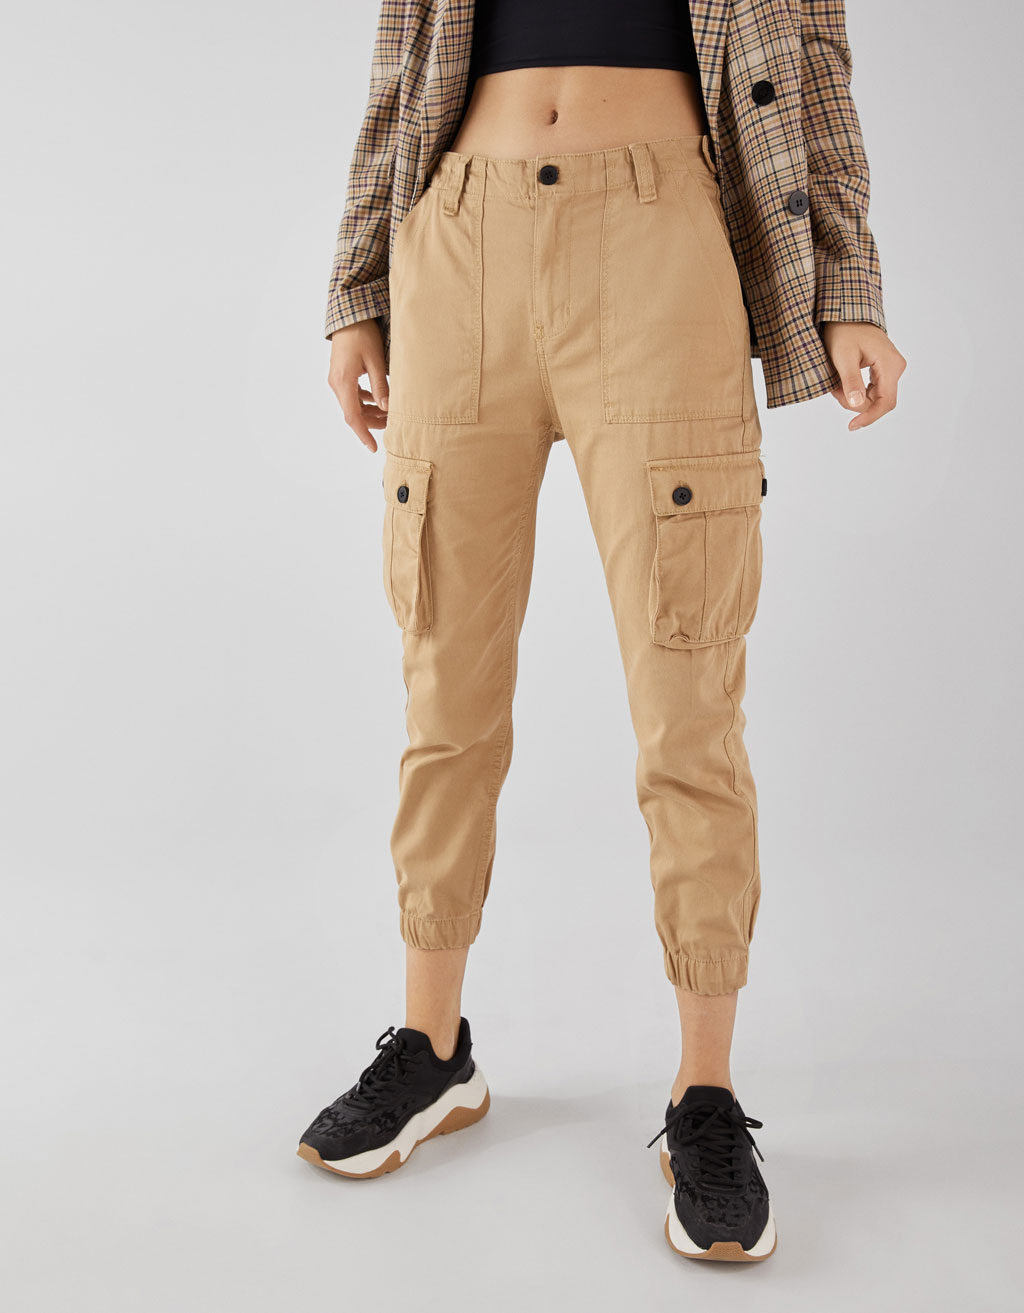 Pantalones Camuflaje Flash Sales - deportesinc.com 1688490017